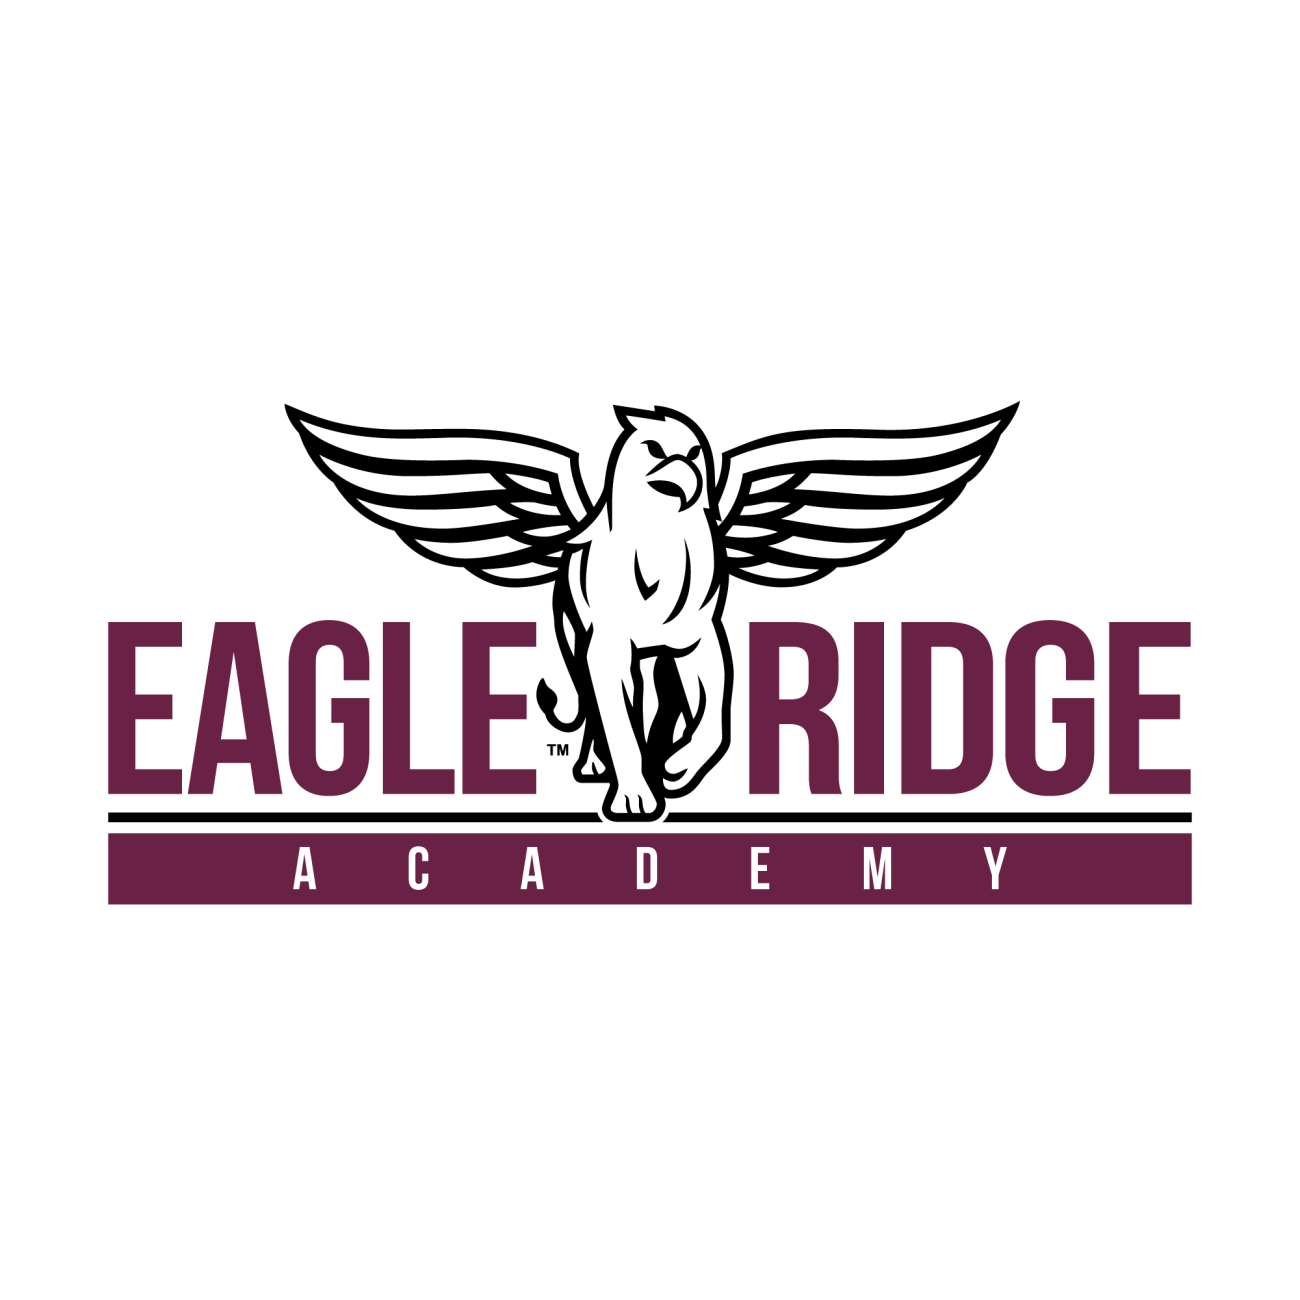 Eagle Ridge Academy